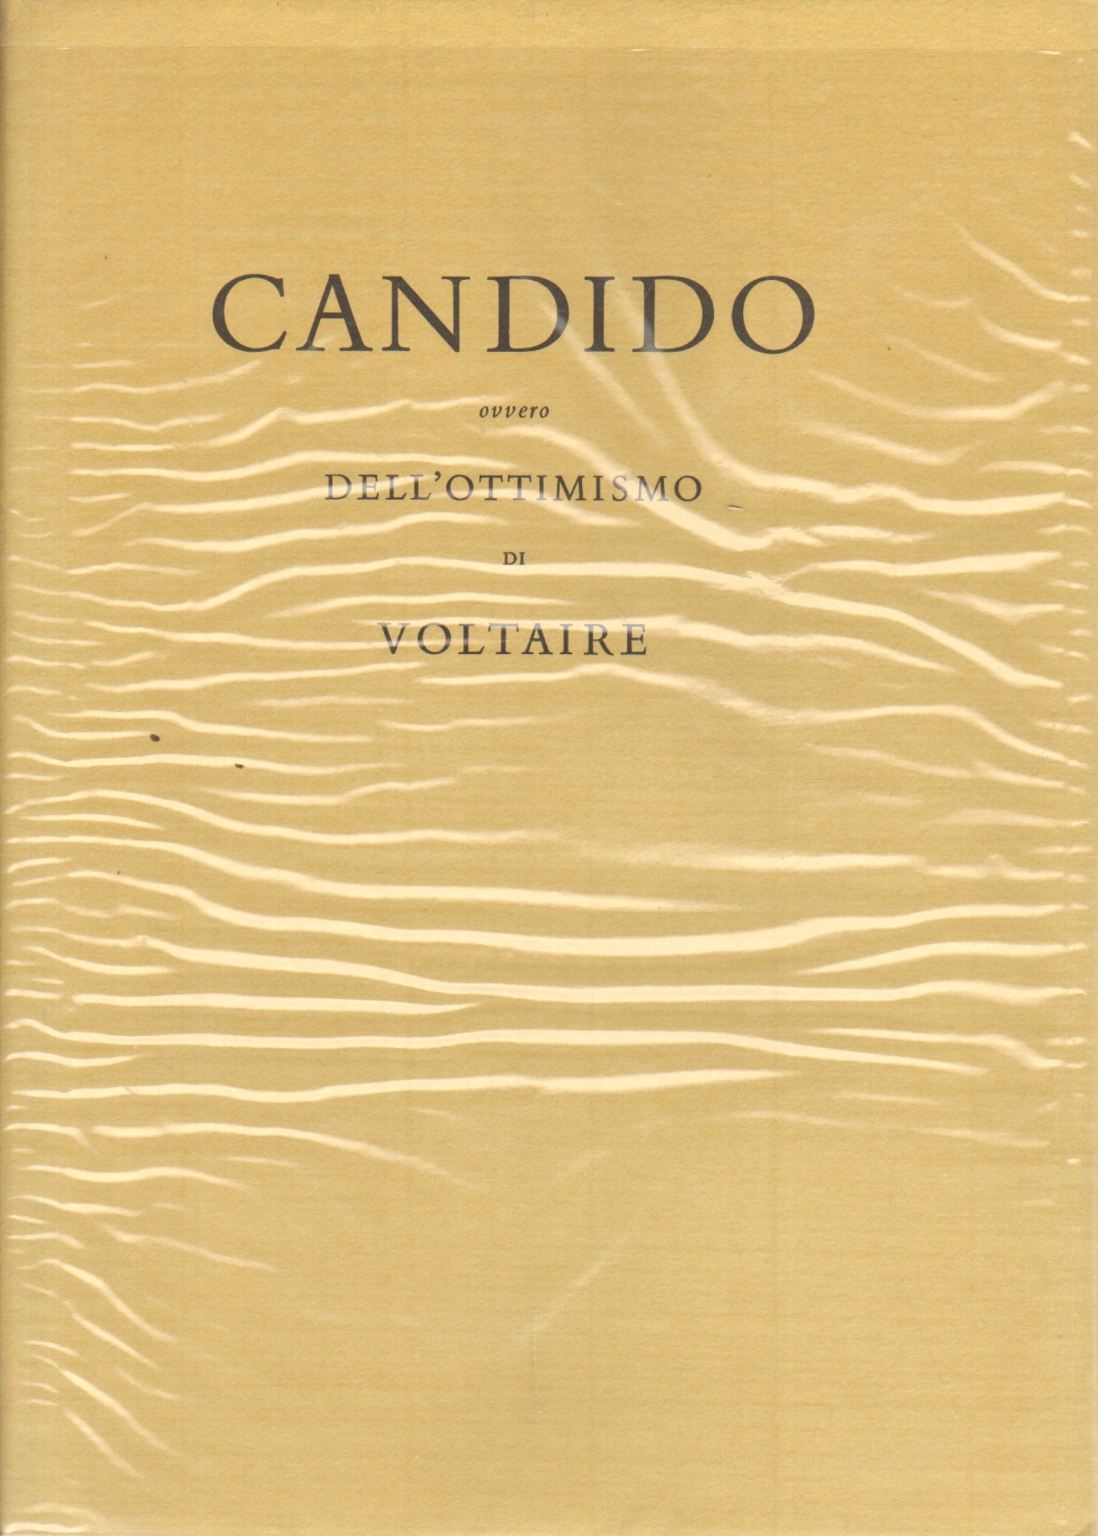 Candido, Voltaire